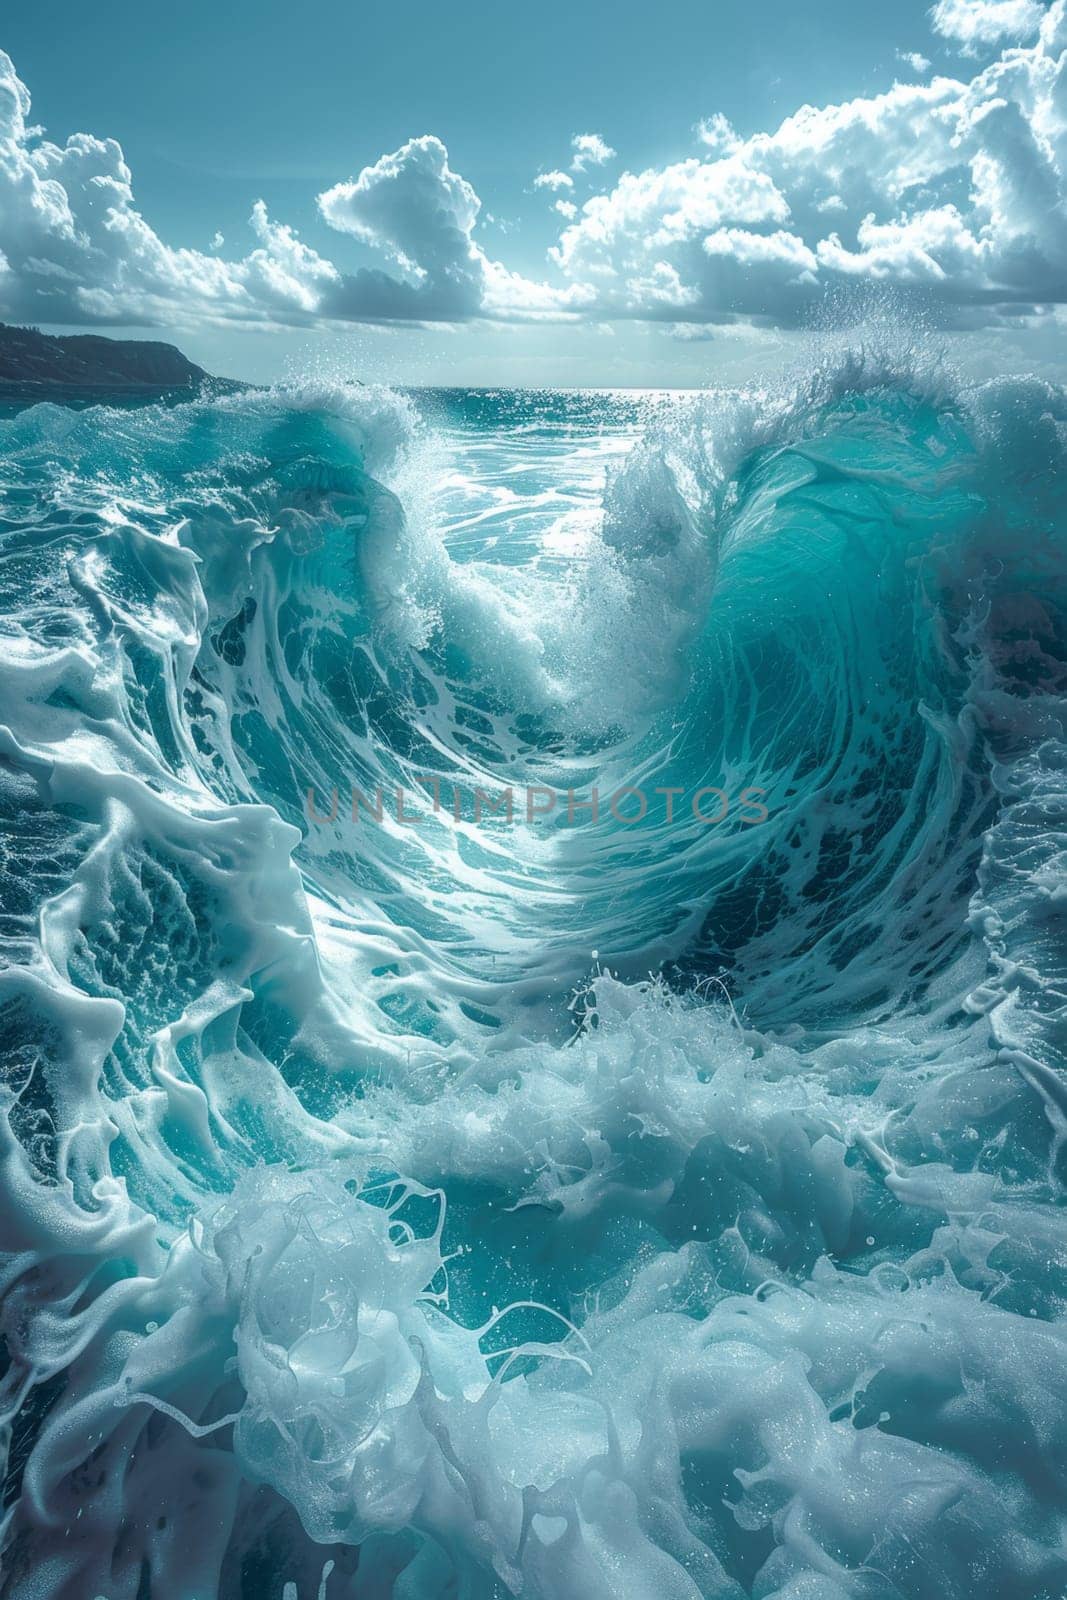 Sea waves. The raging ocean. World Oceans Day.